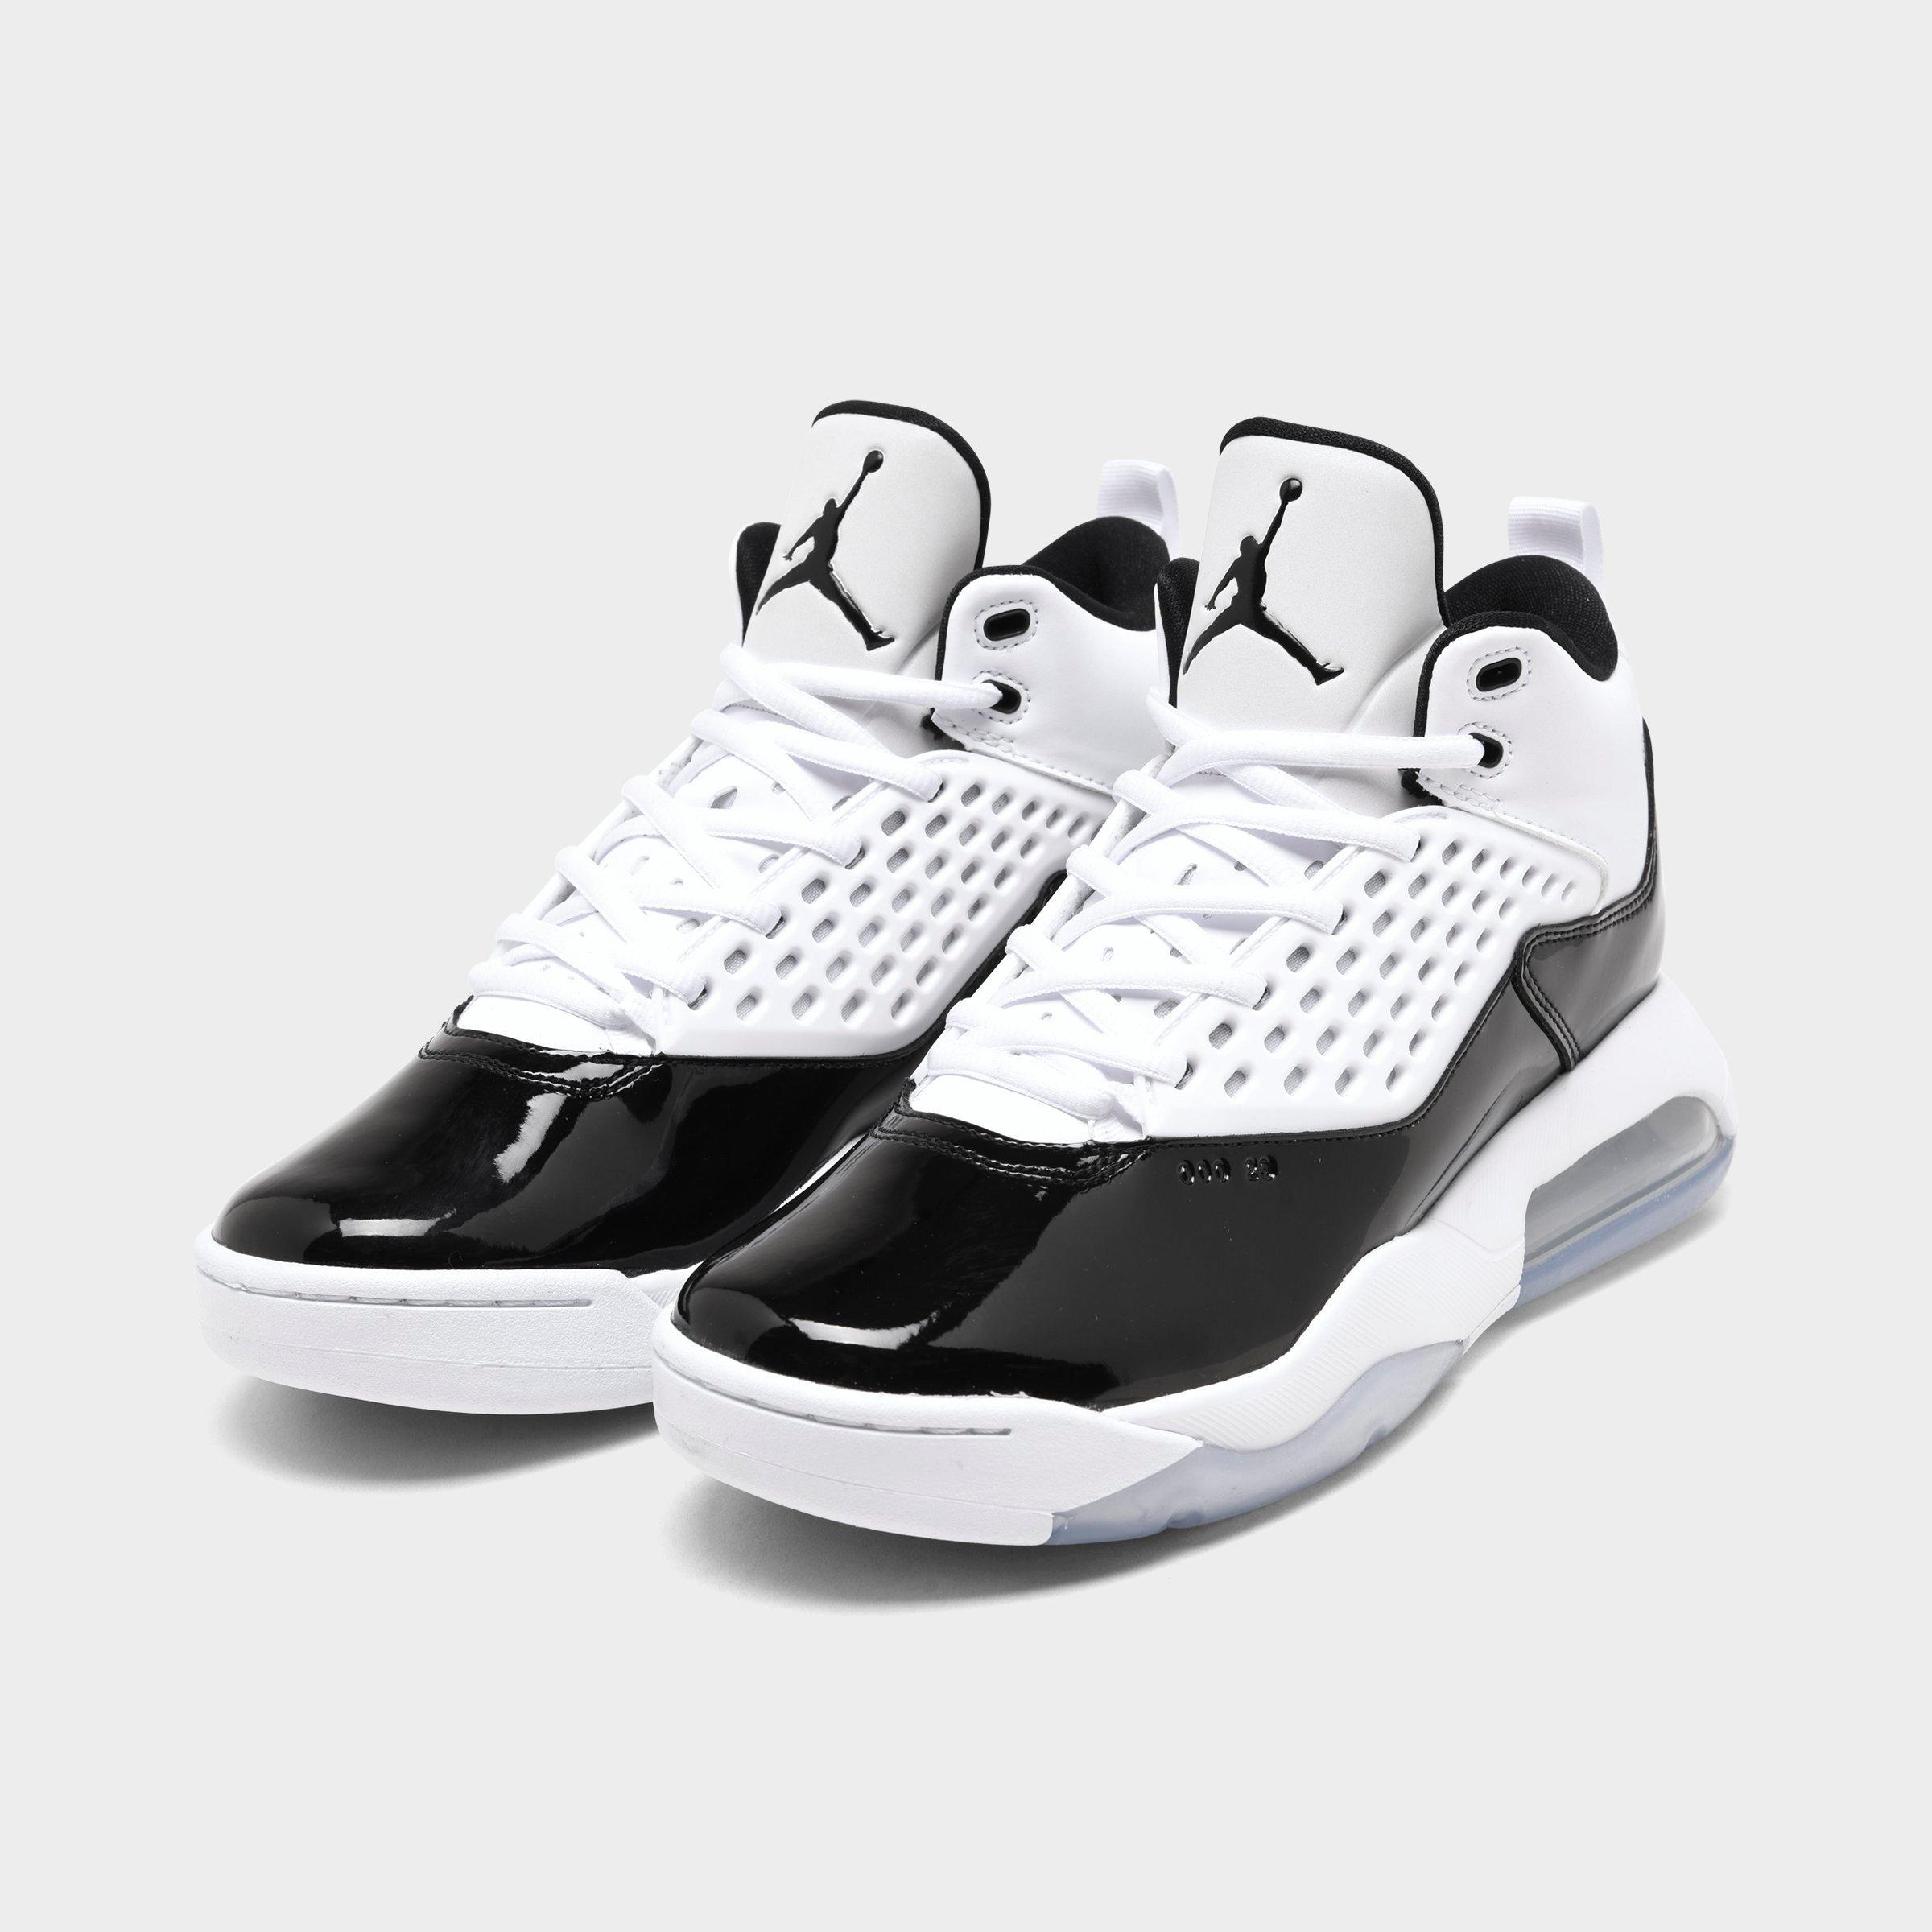 jordan maxin 200 basketball shoes